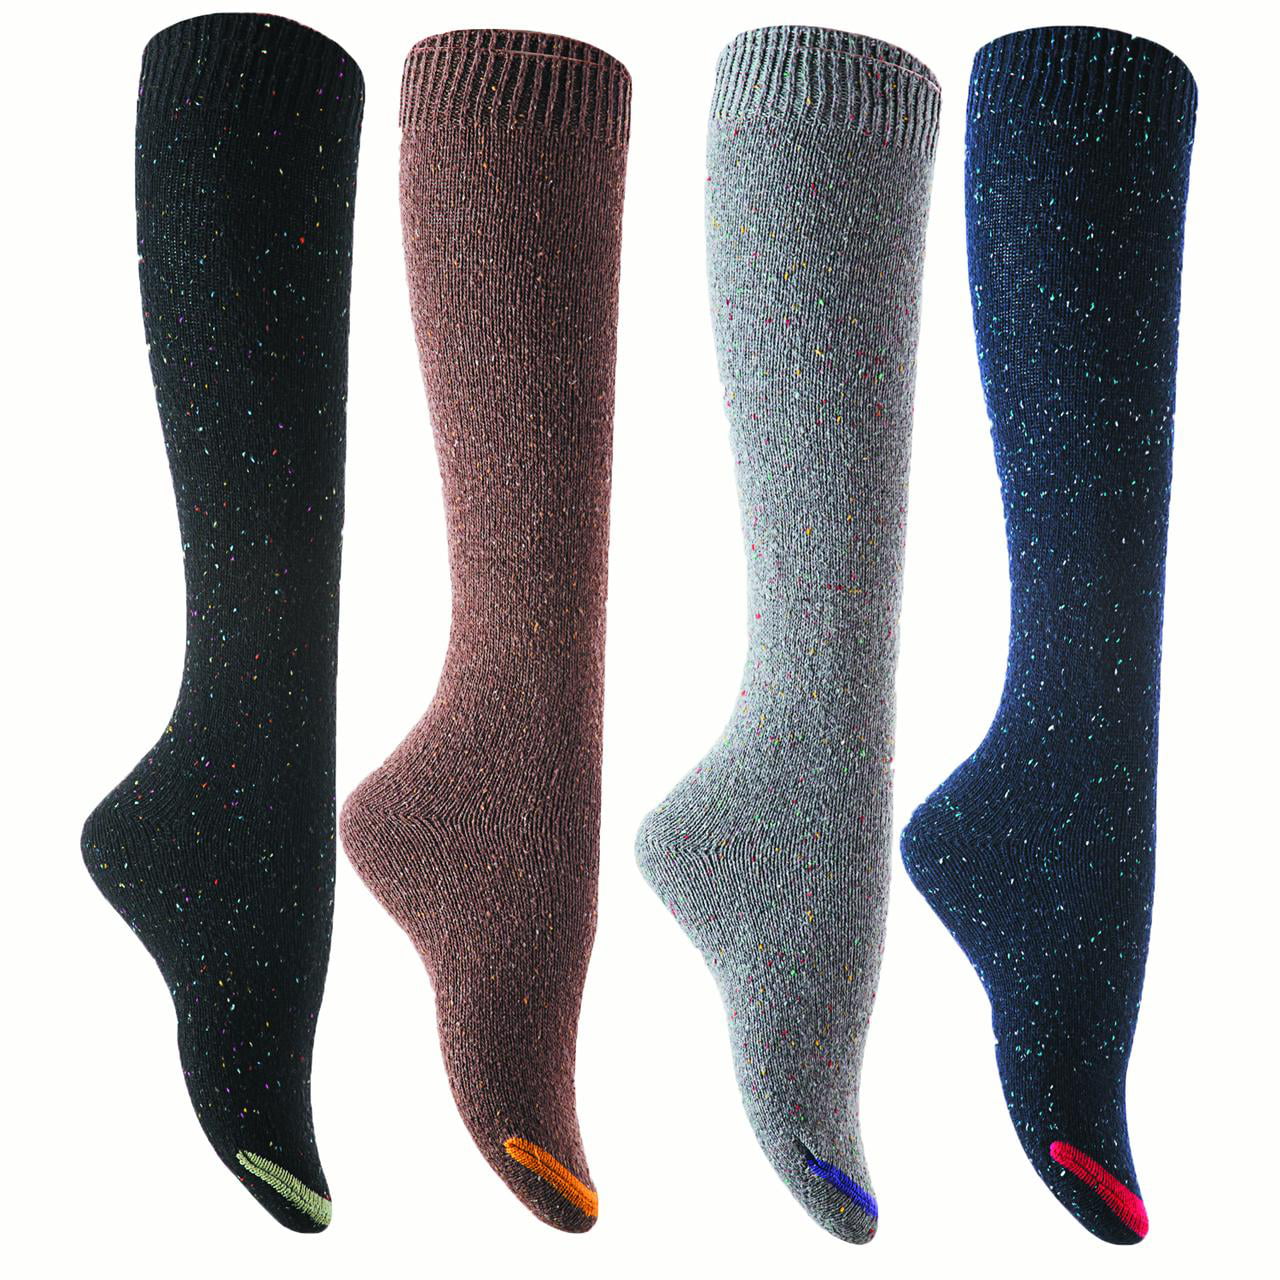 Comfortable womens socks